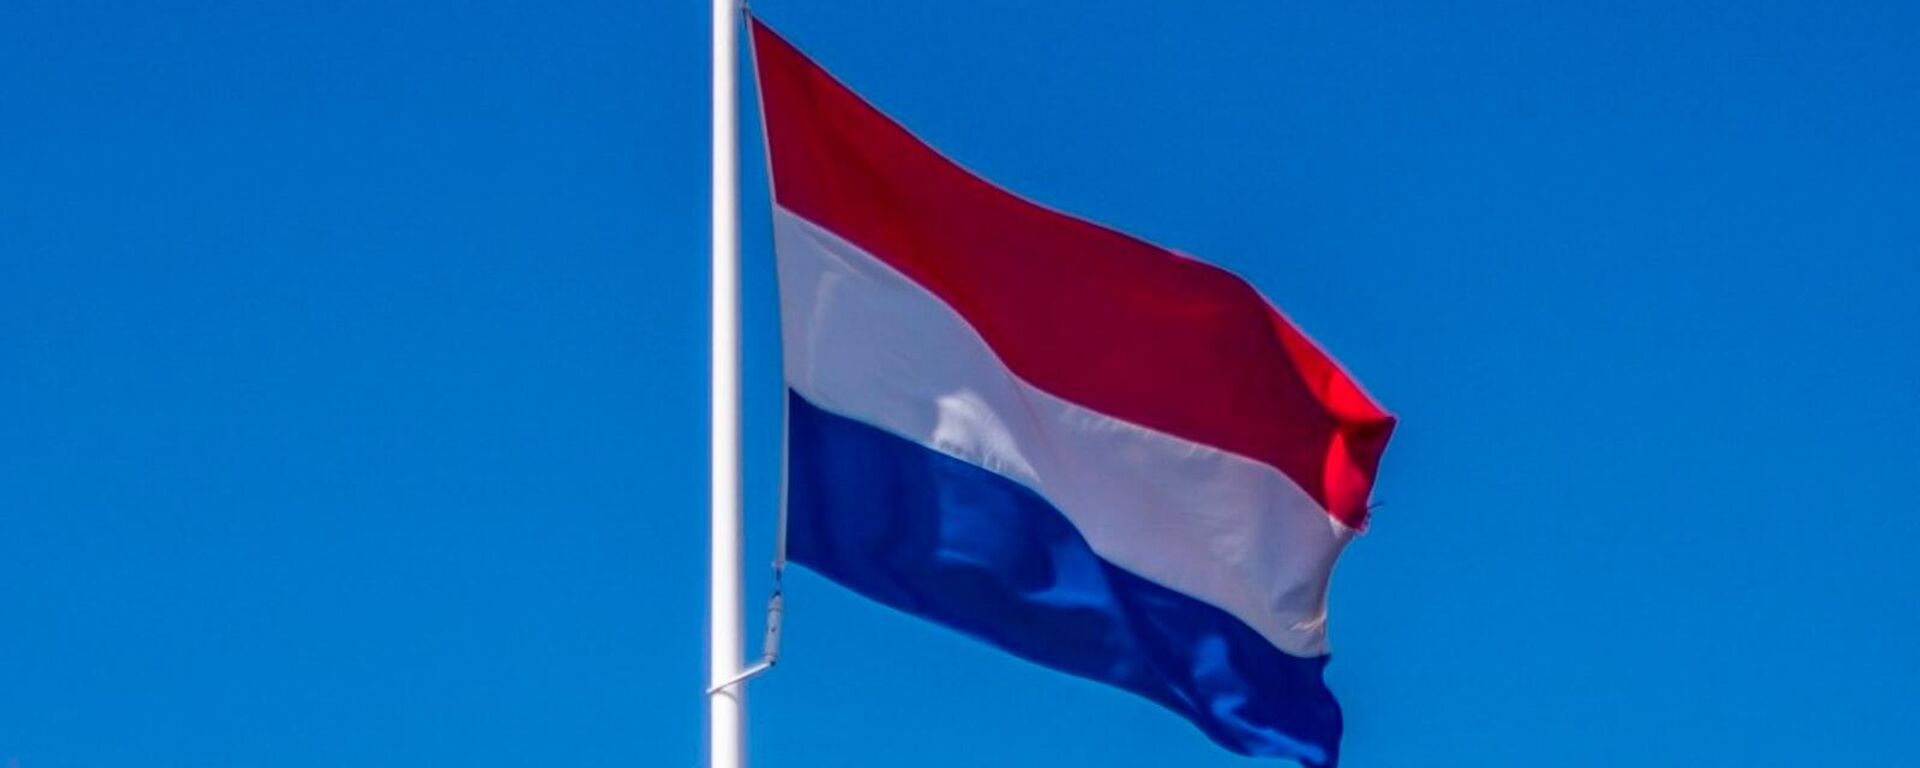 Флаг Нидерландов - Sputnik Латвия, 1920, 14.04.2016